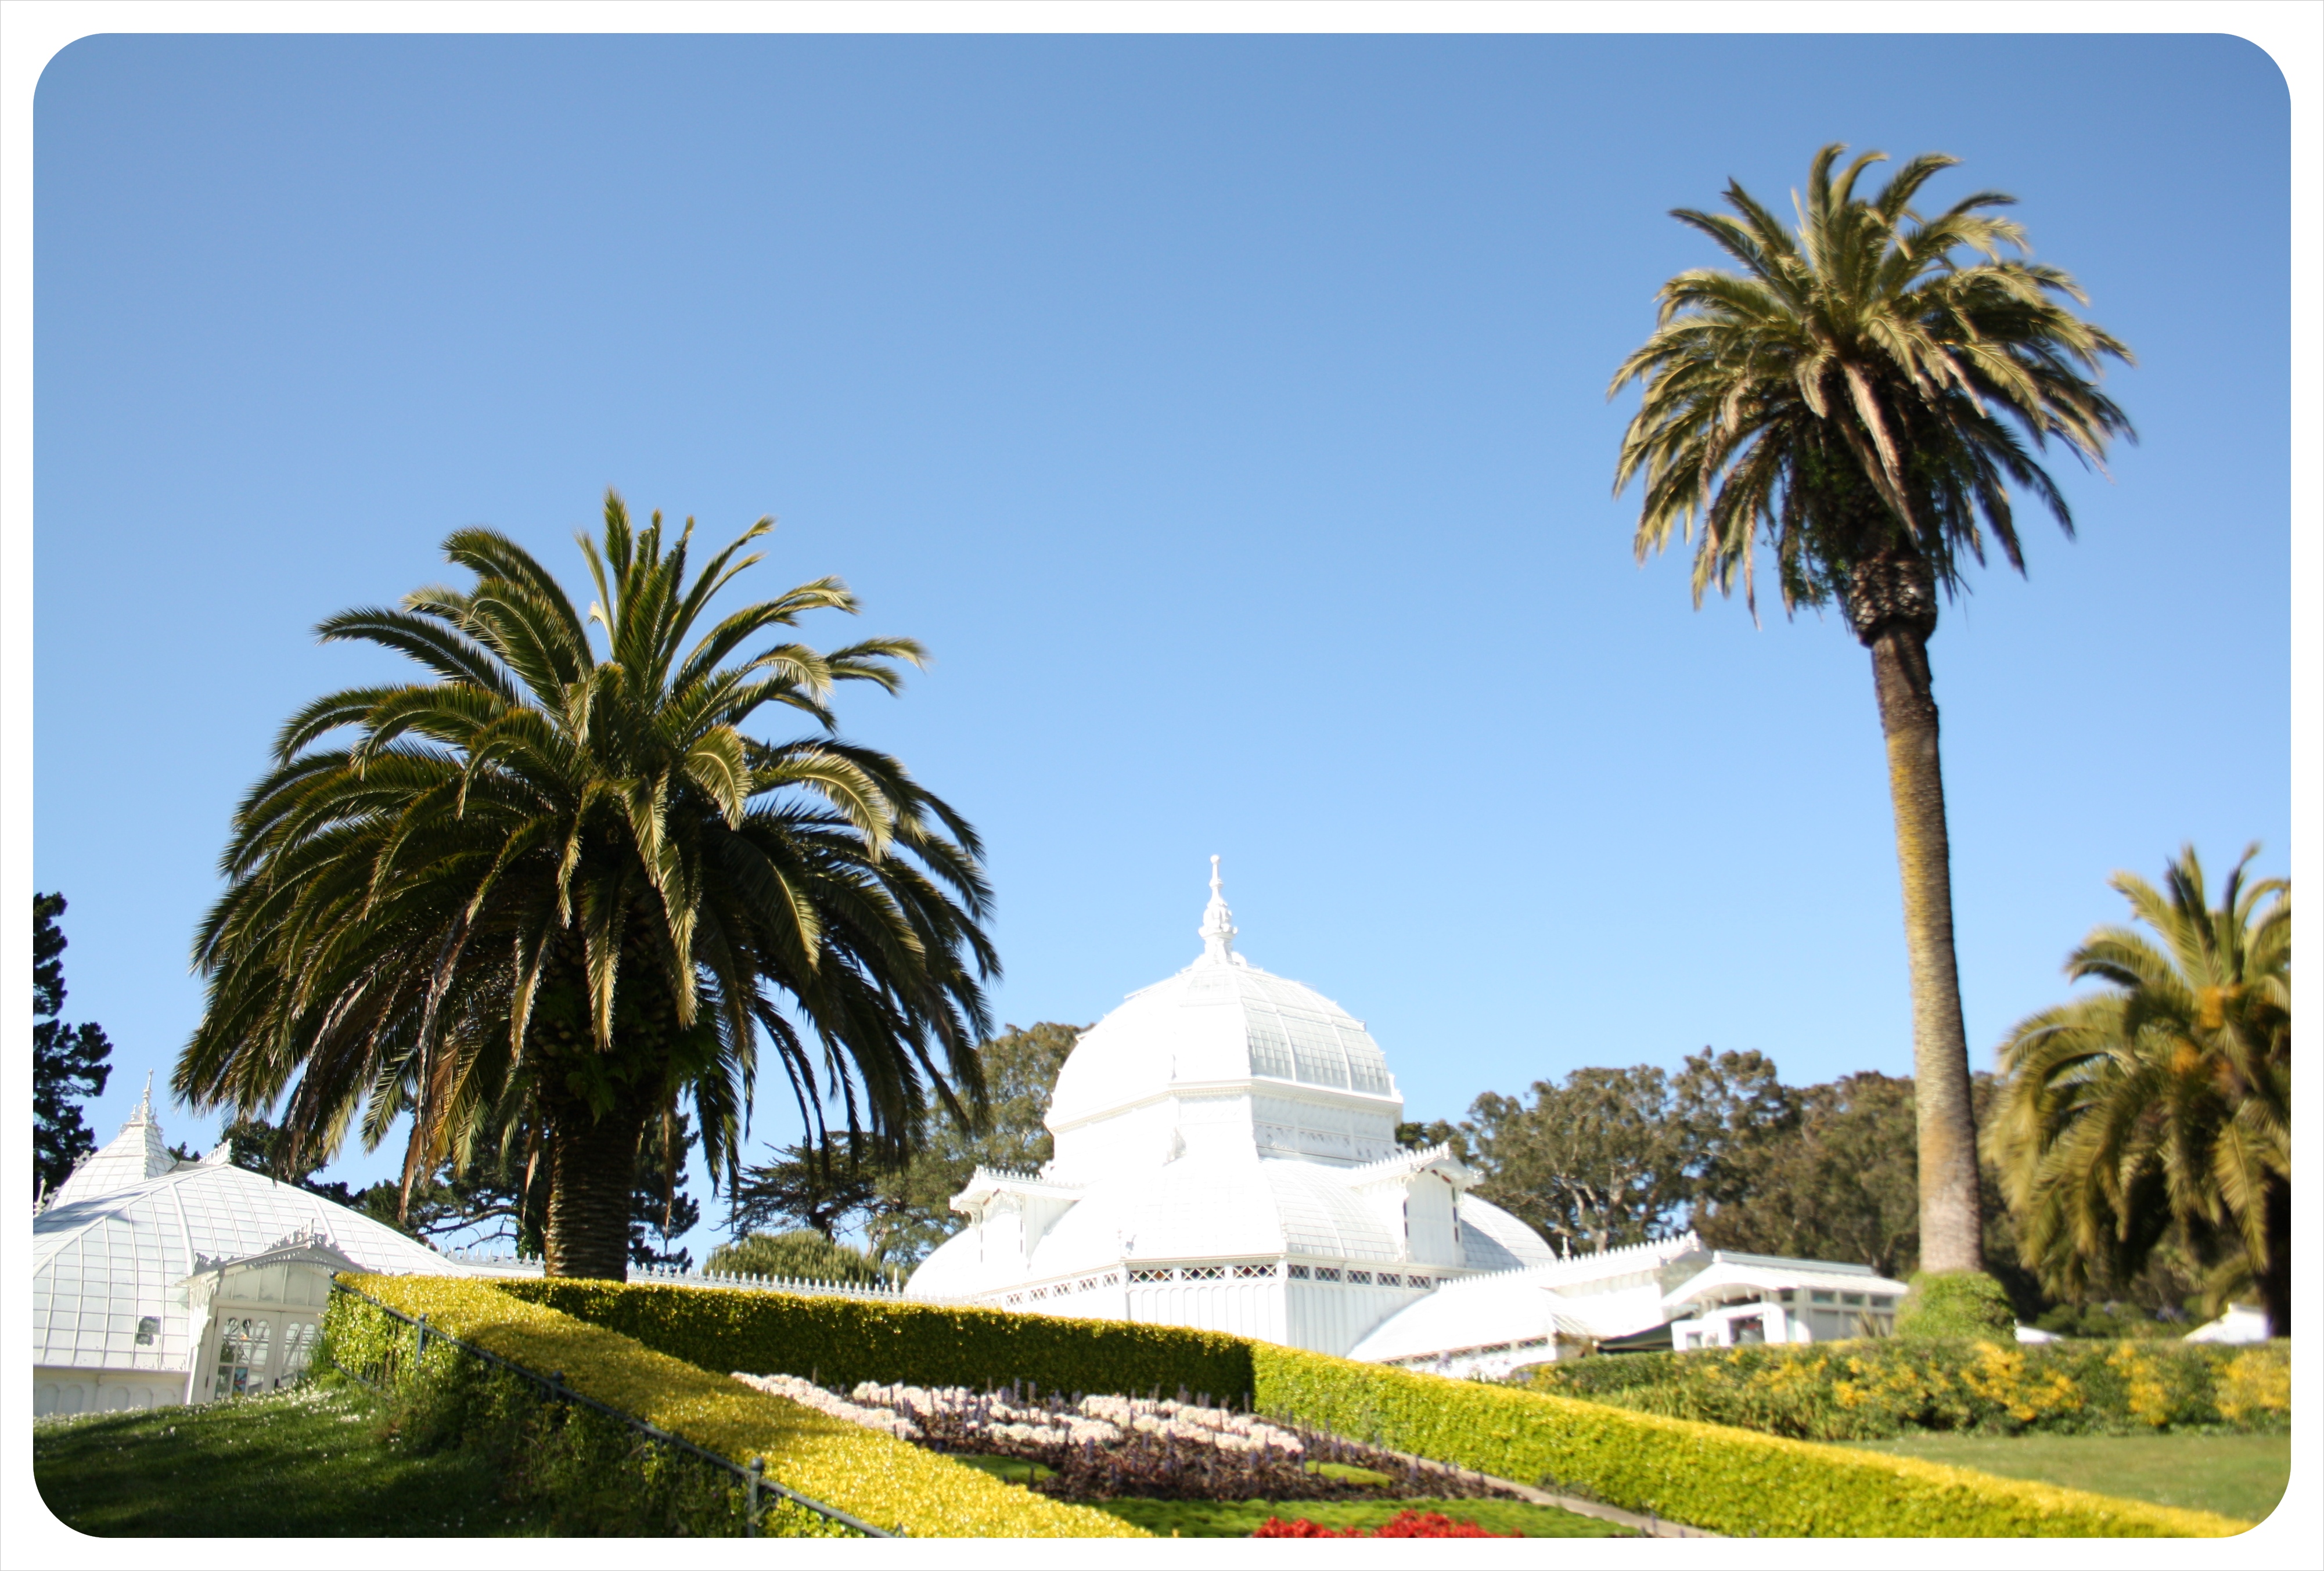 San Francisco’s largest Don’t Miss attraction – Golden Gate Park